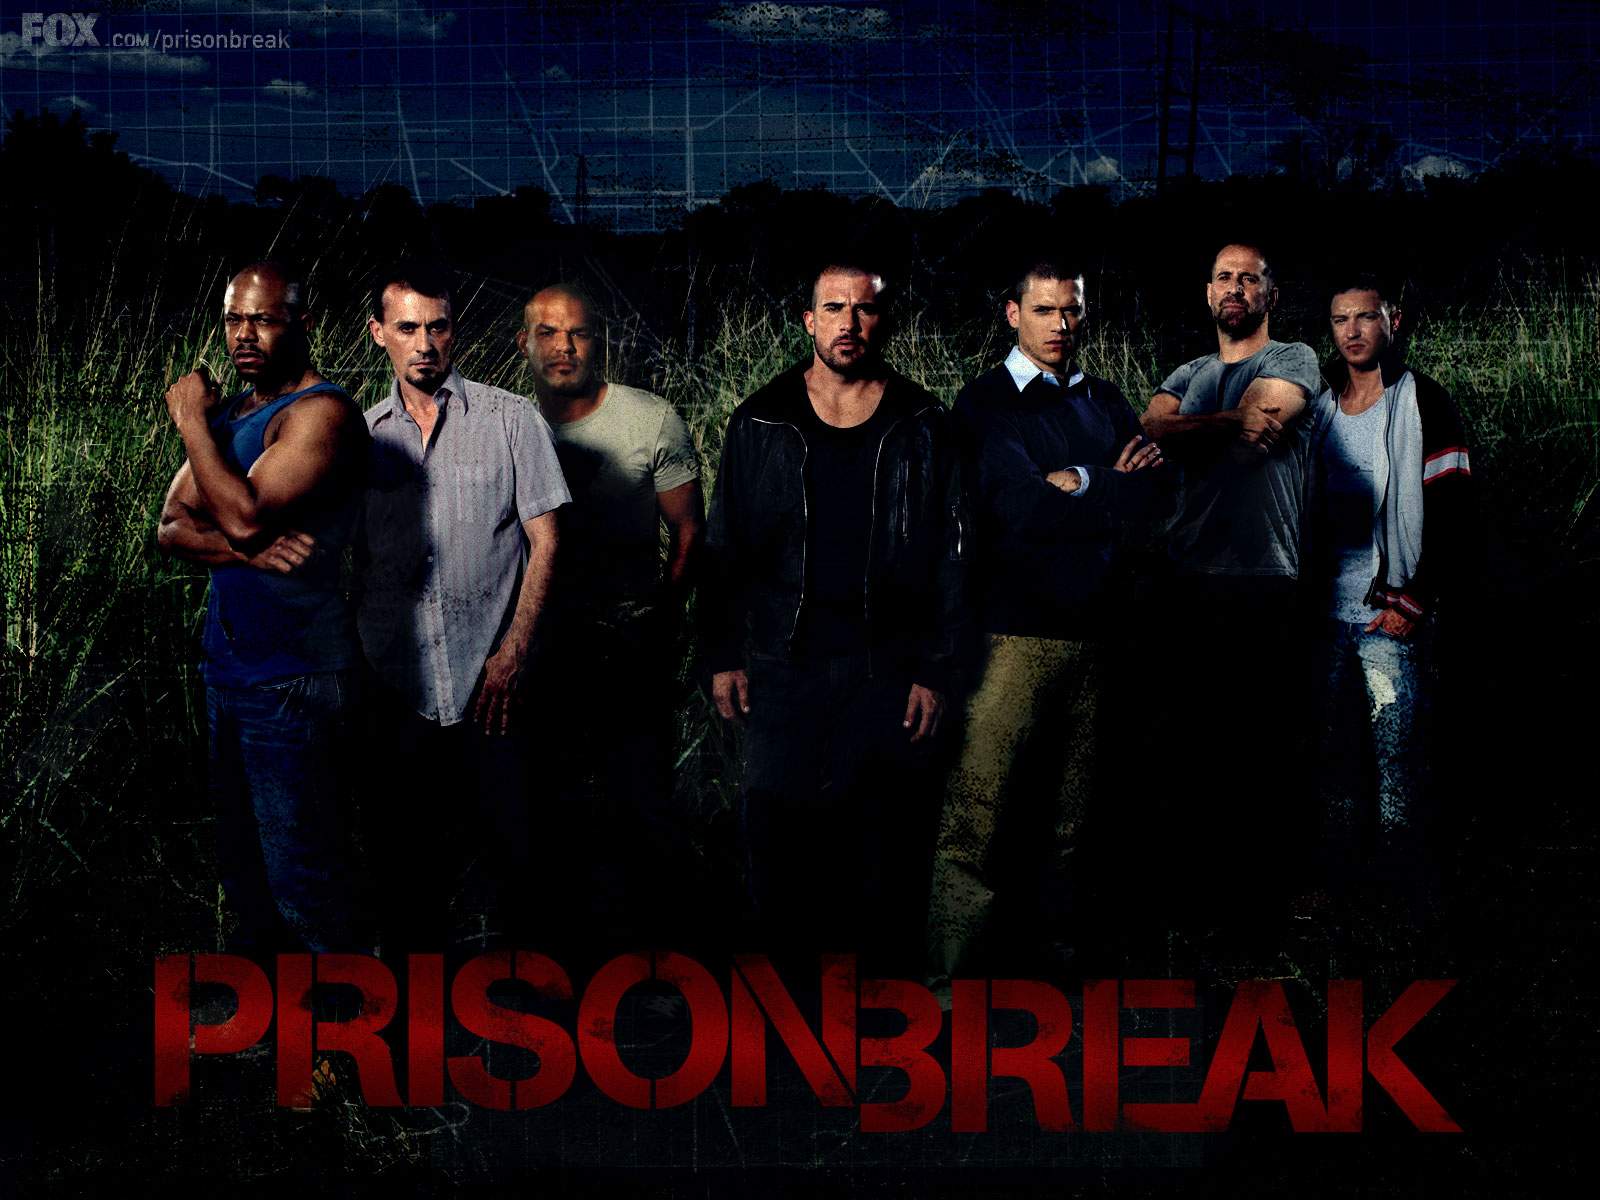 Prison Break Season Wallpaper